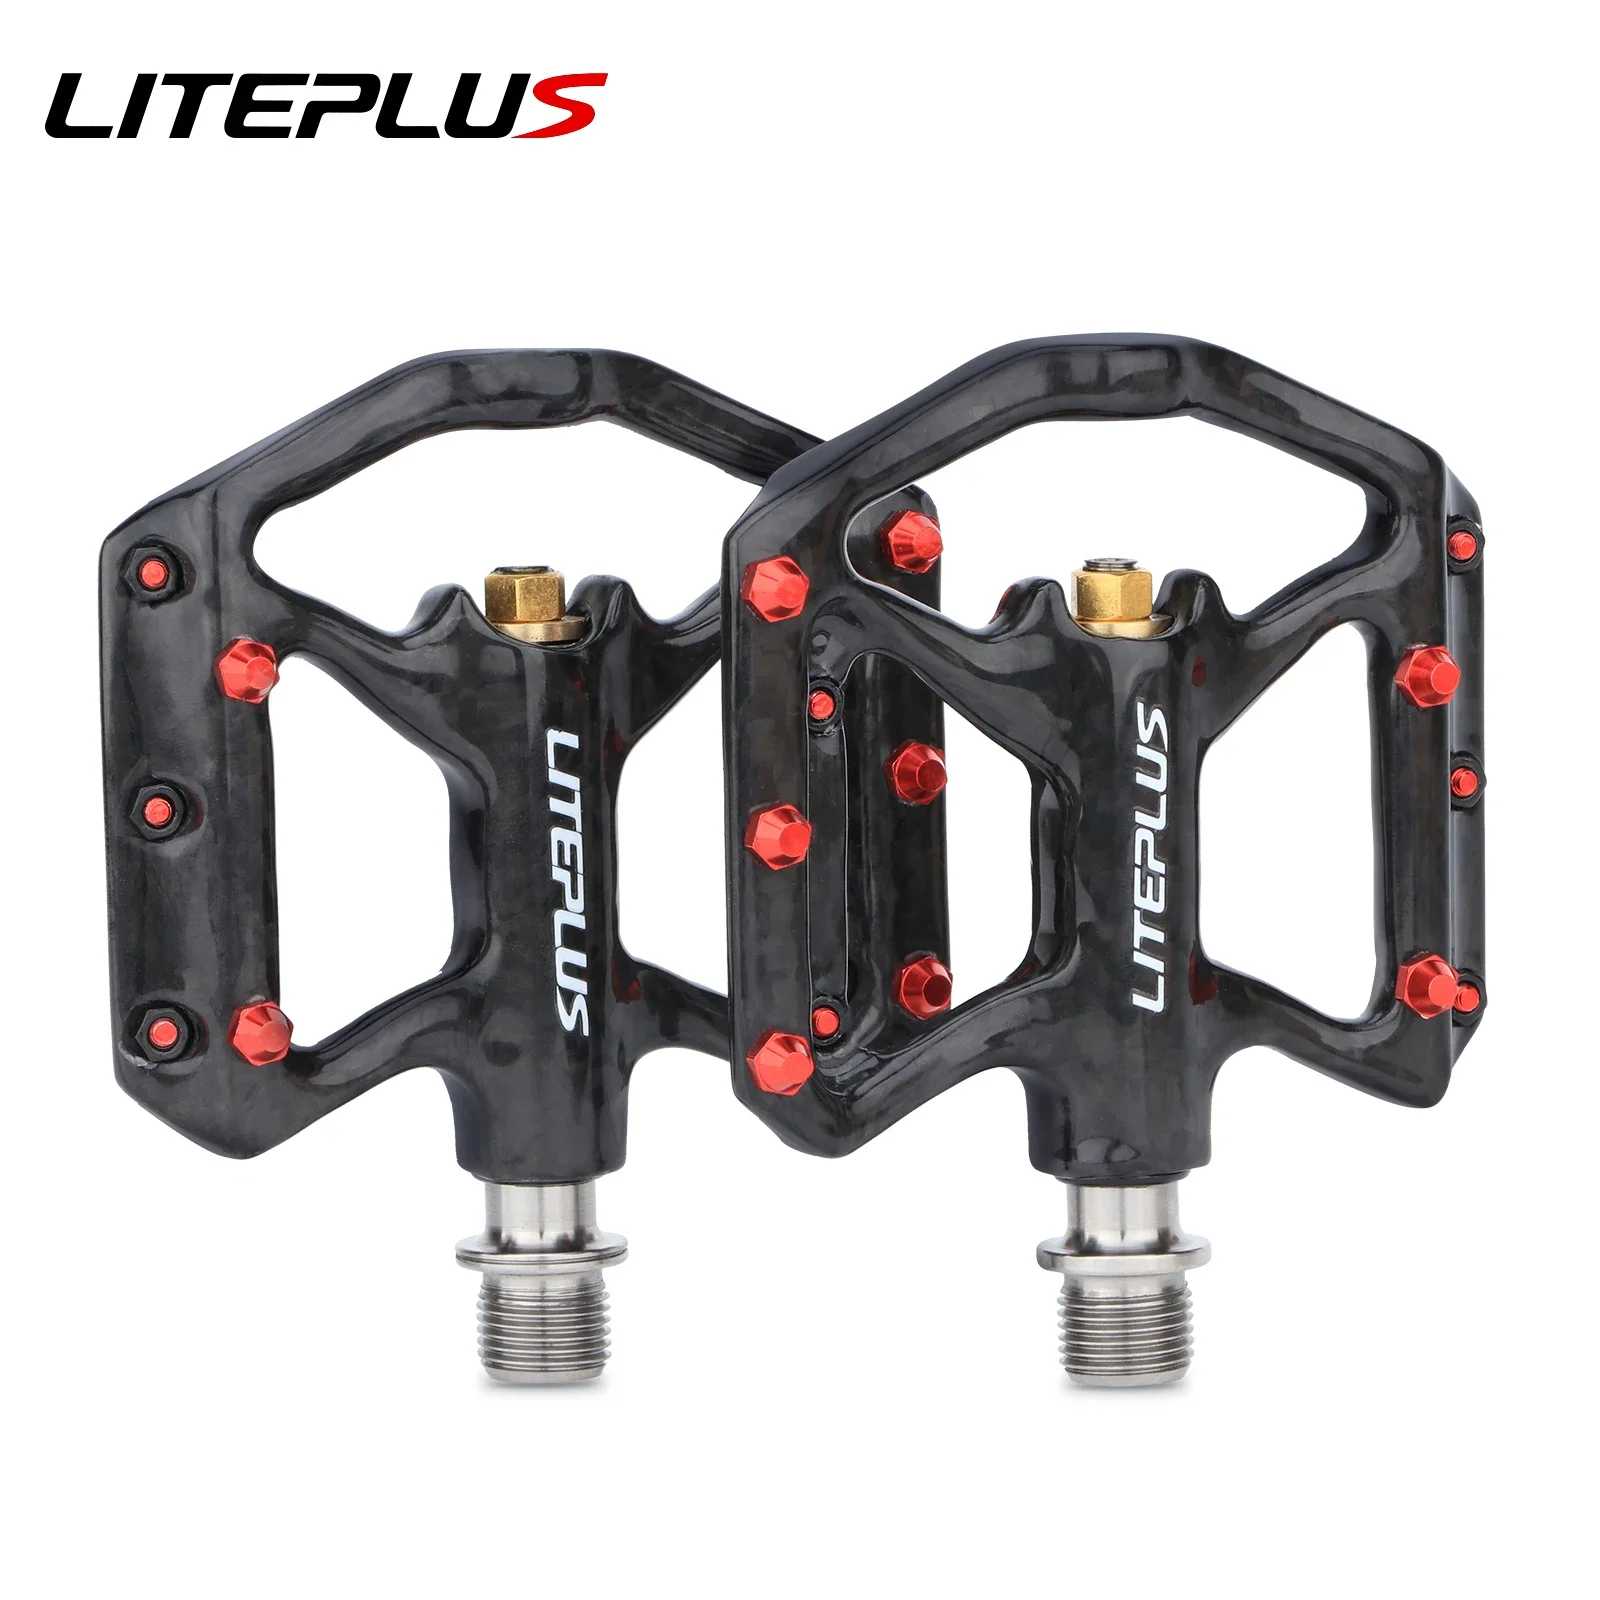 

Liteplus Ultralight Carbon Fiber Pedal Titanium Sealed Bearings For Folding Bicycle Mountain Non-Slip Bike Pedals